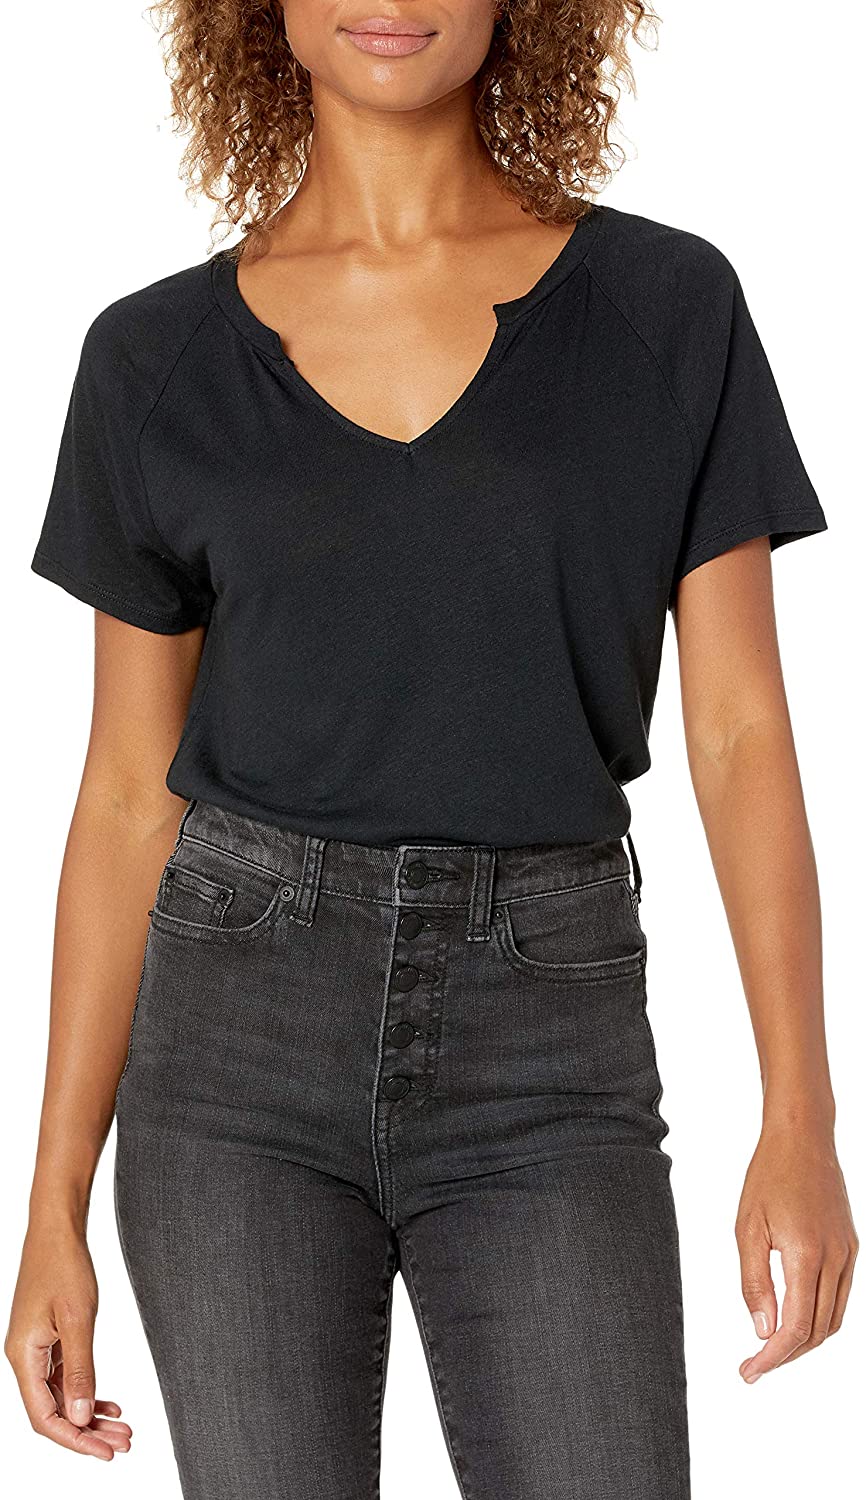 Price:$11.70    Amazon Brand - Goodthreads Women's Linen Modal Jersey Short-Sleeve Slit-Neck T-Shirt  Clothing